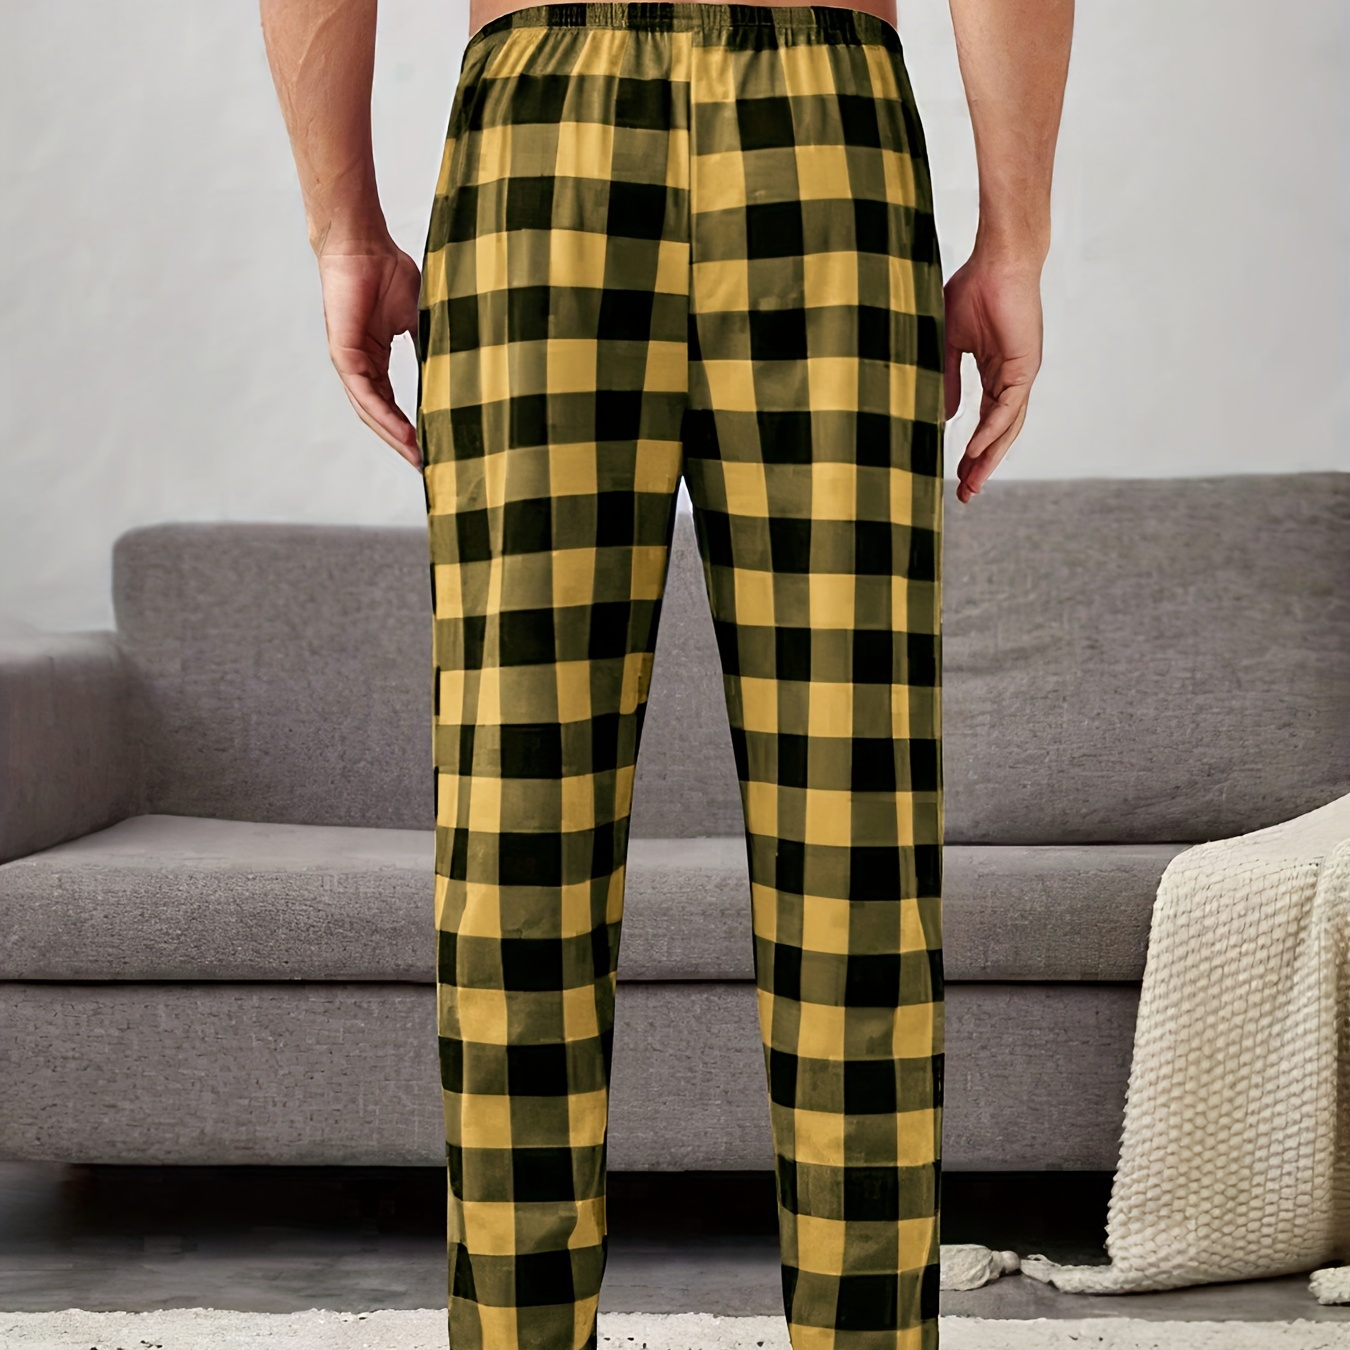 

Men's Fashion Casual Check Plaid Trousers Elastic Waist Comfy Loungewear Pants Pajamas Bottoms